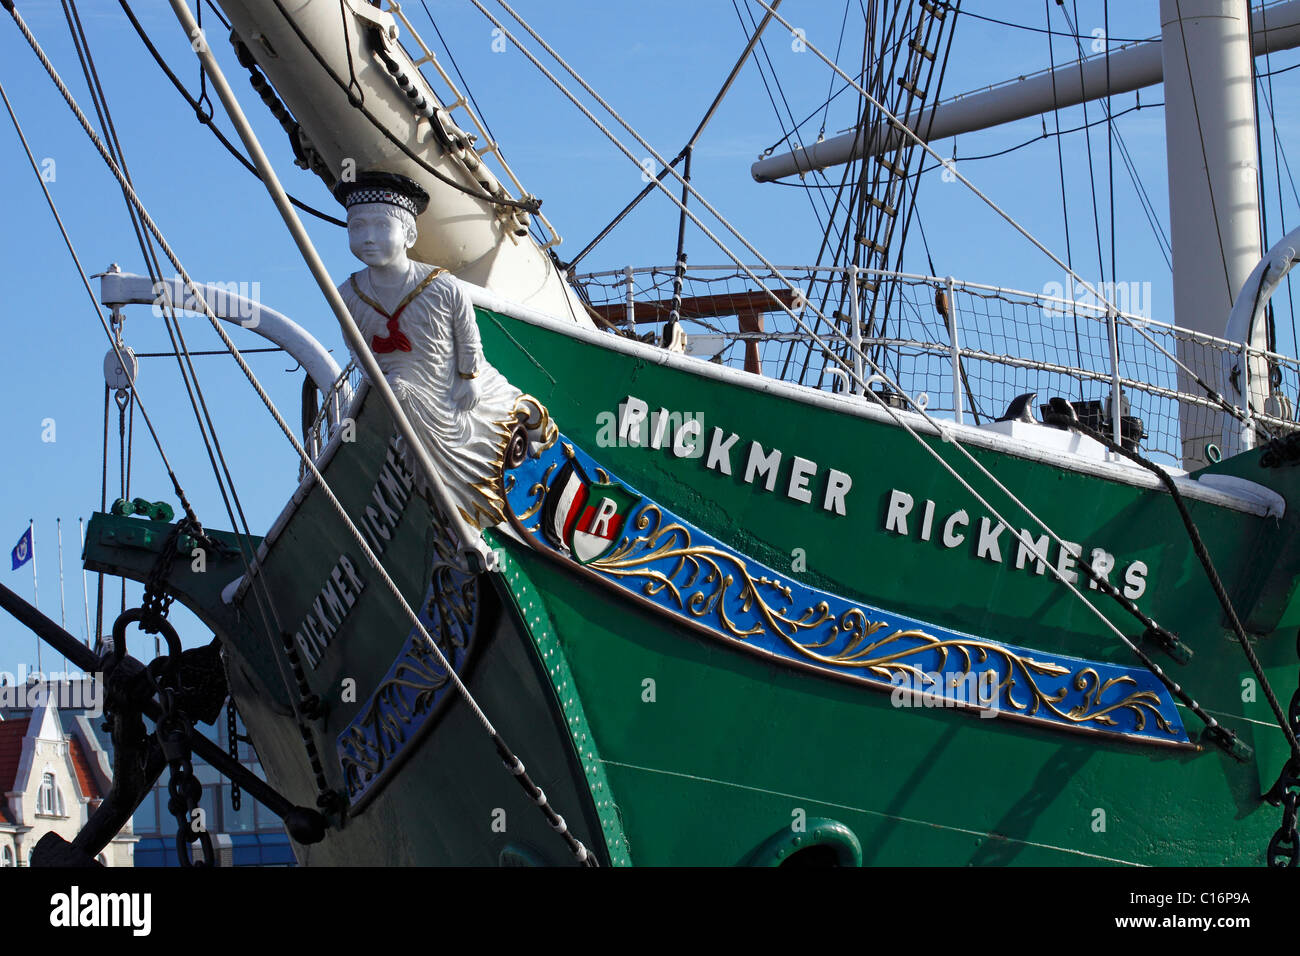 Rickmer Rickmers, museum ship at the Port of Hamburg, sailing ship with figurehead, tall ship, three-masted barque, windjammer Stock Photo